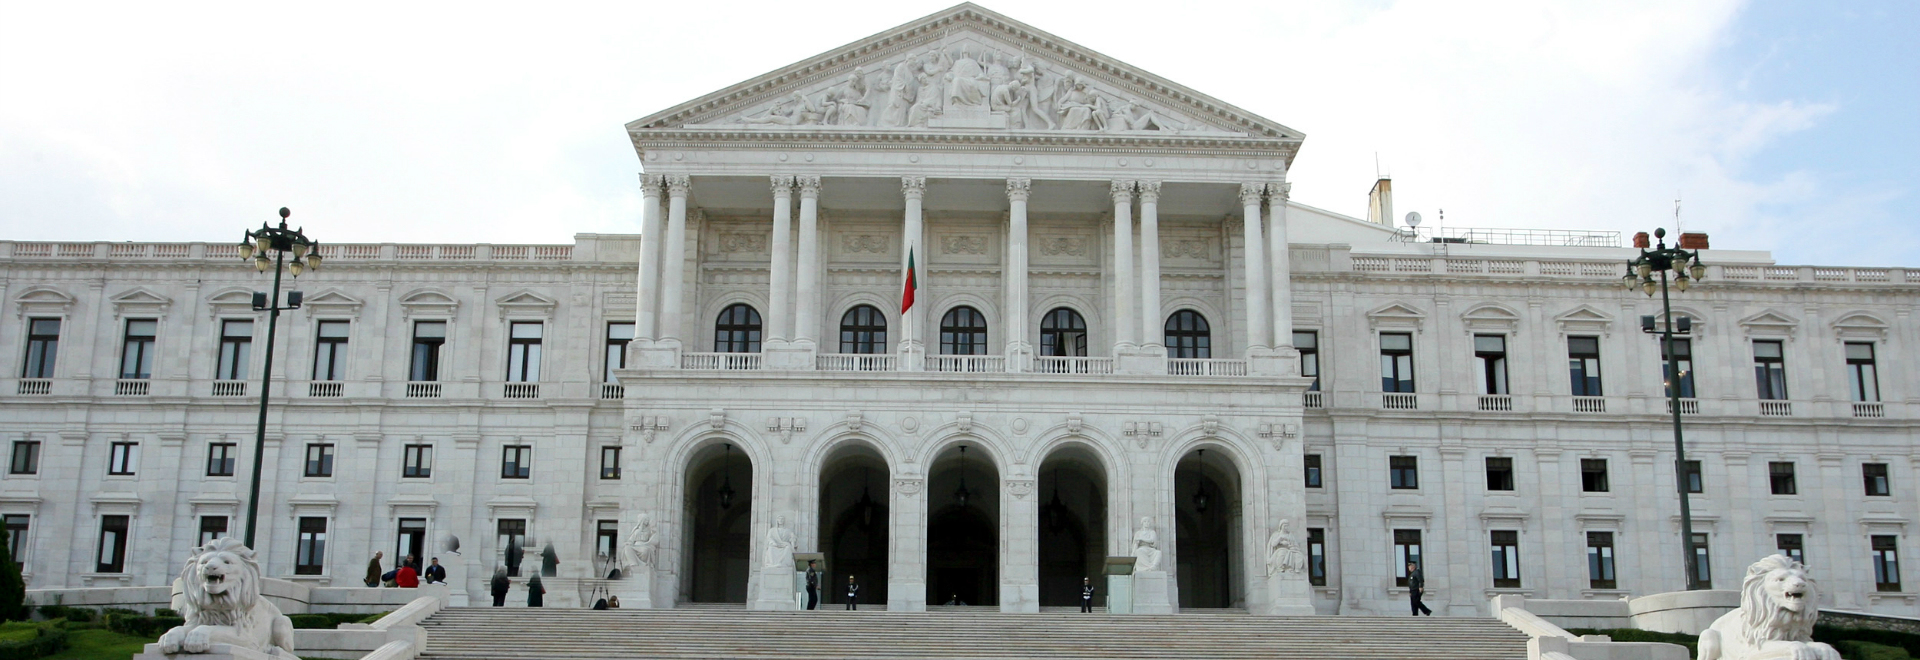 Sao Bento Palast Lisboa Portugal